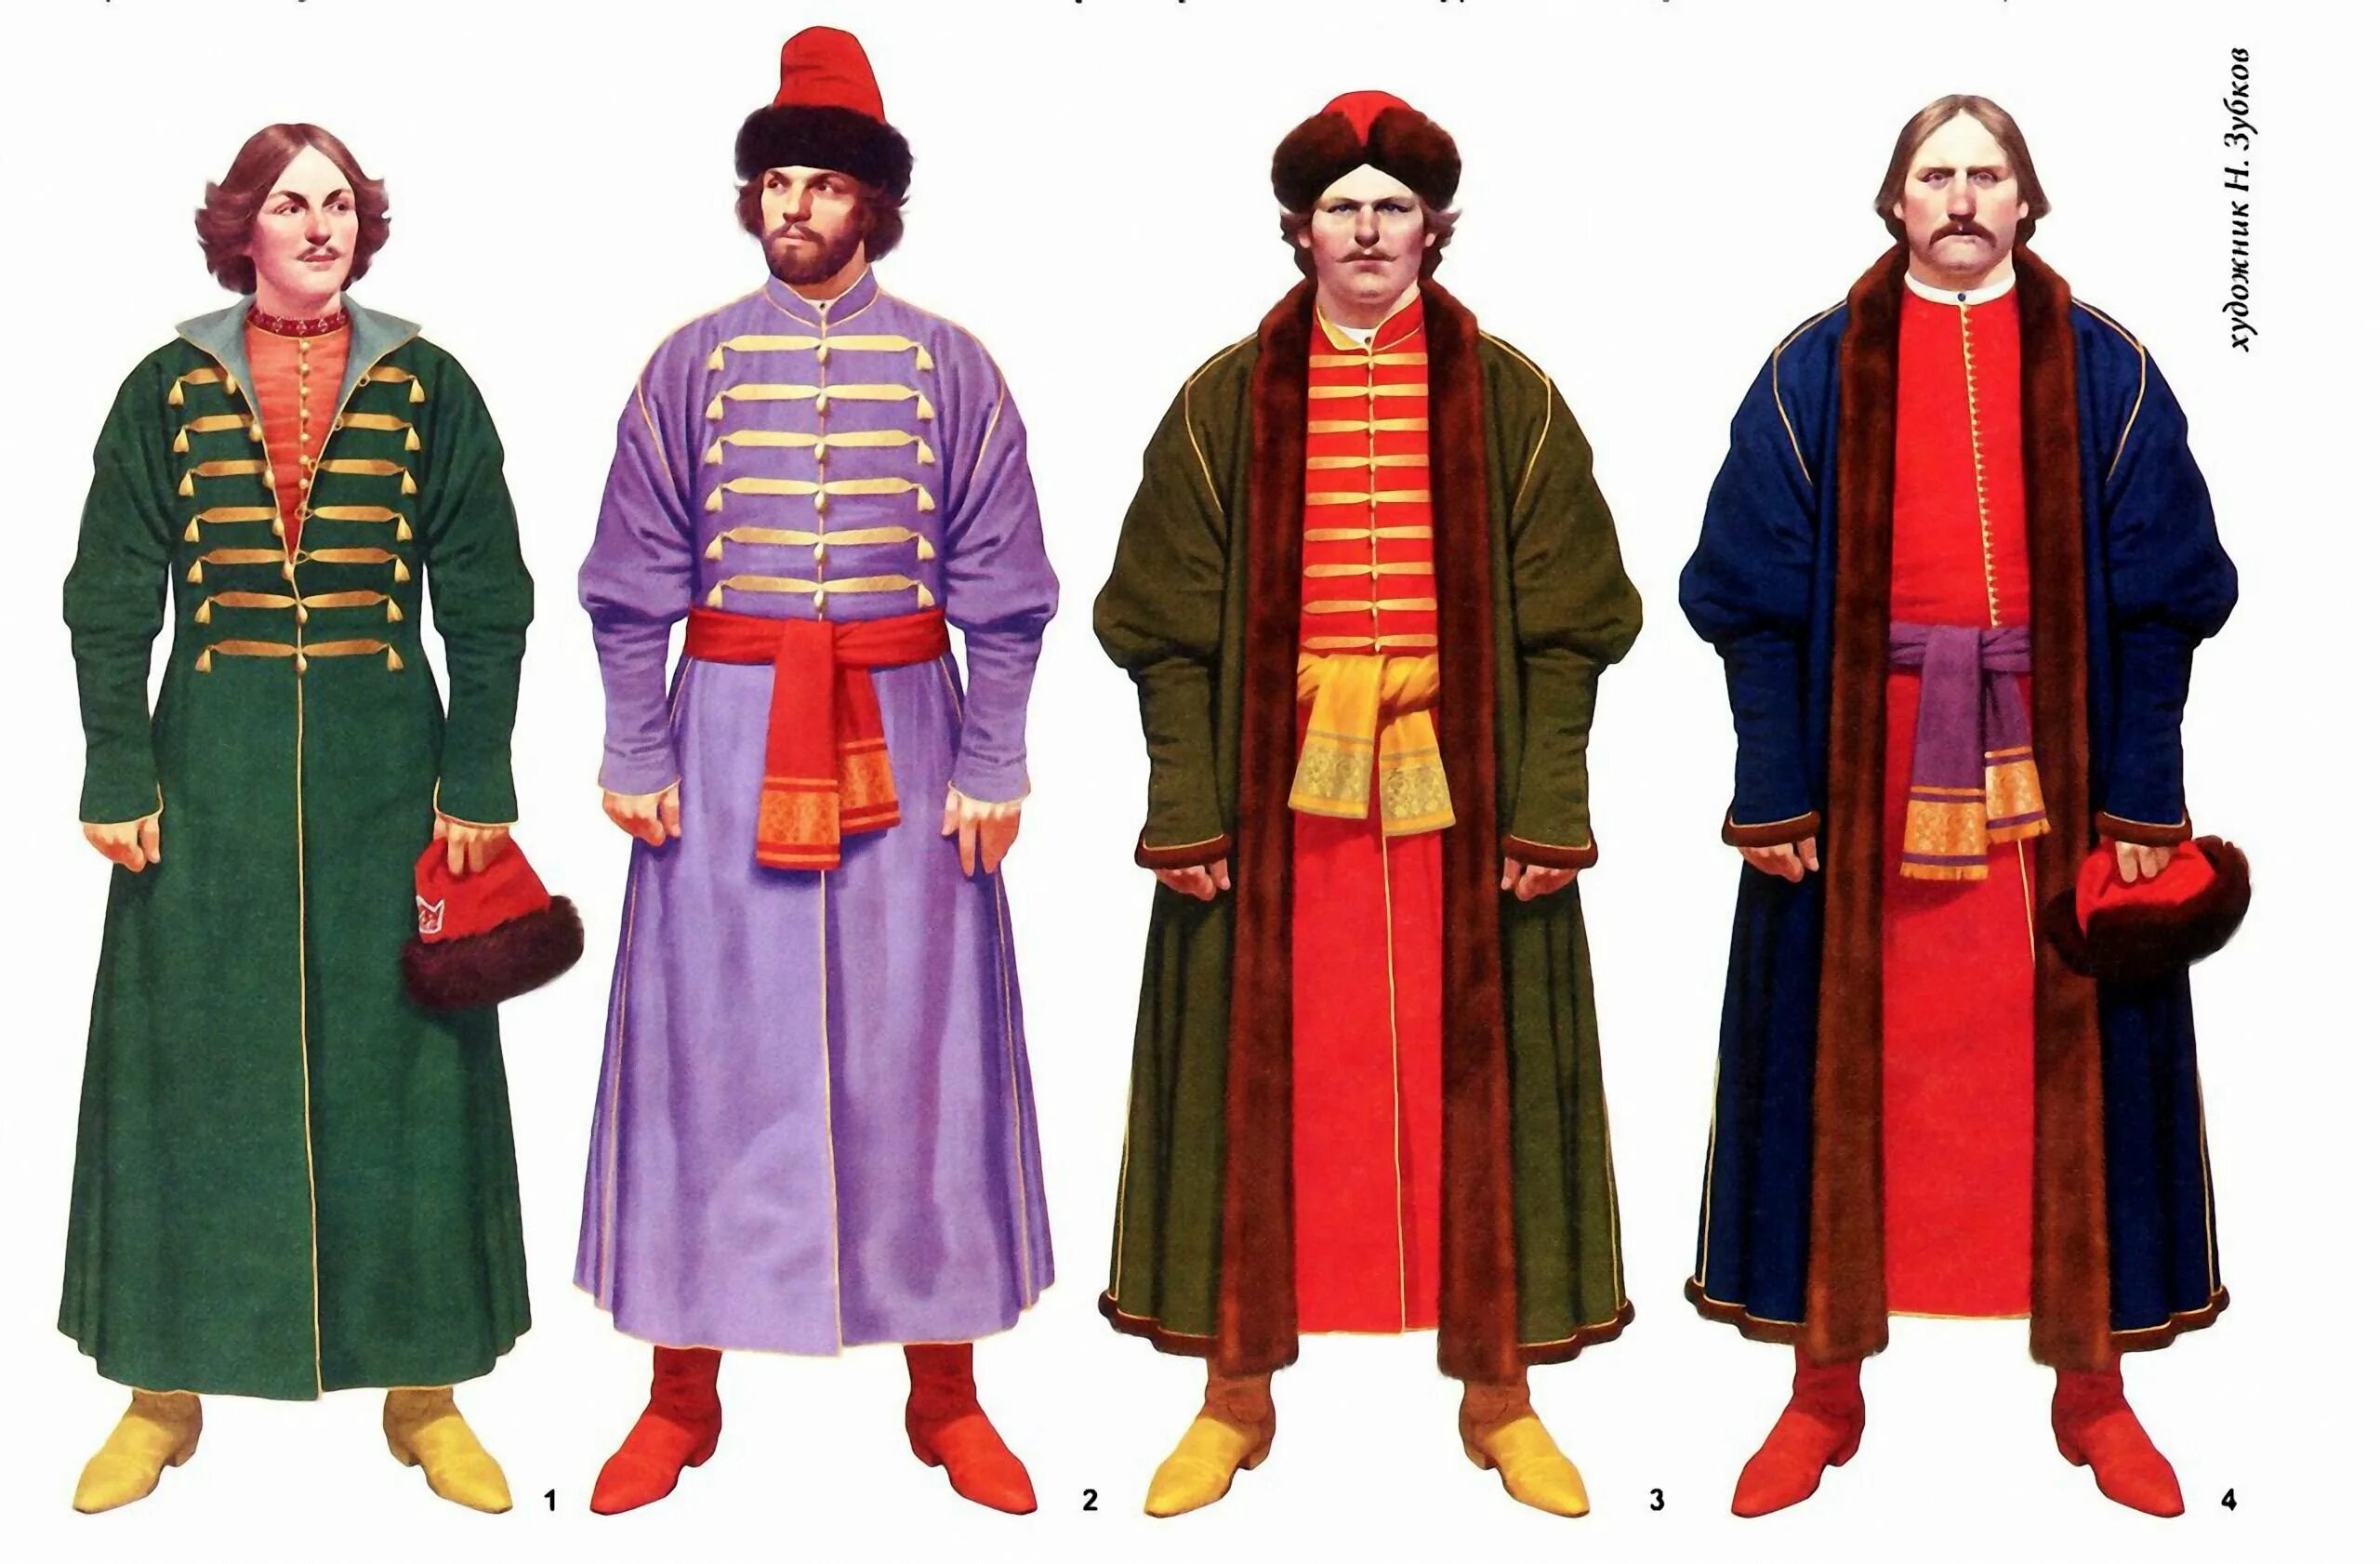 Старинная мужская верхняя. Боярский кафтан 17 век. Мужская одежда Русь 16 век. Зипун одежда 17 века. Одежда боя р16 - 17 века.